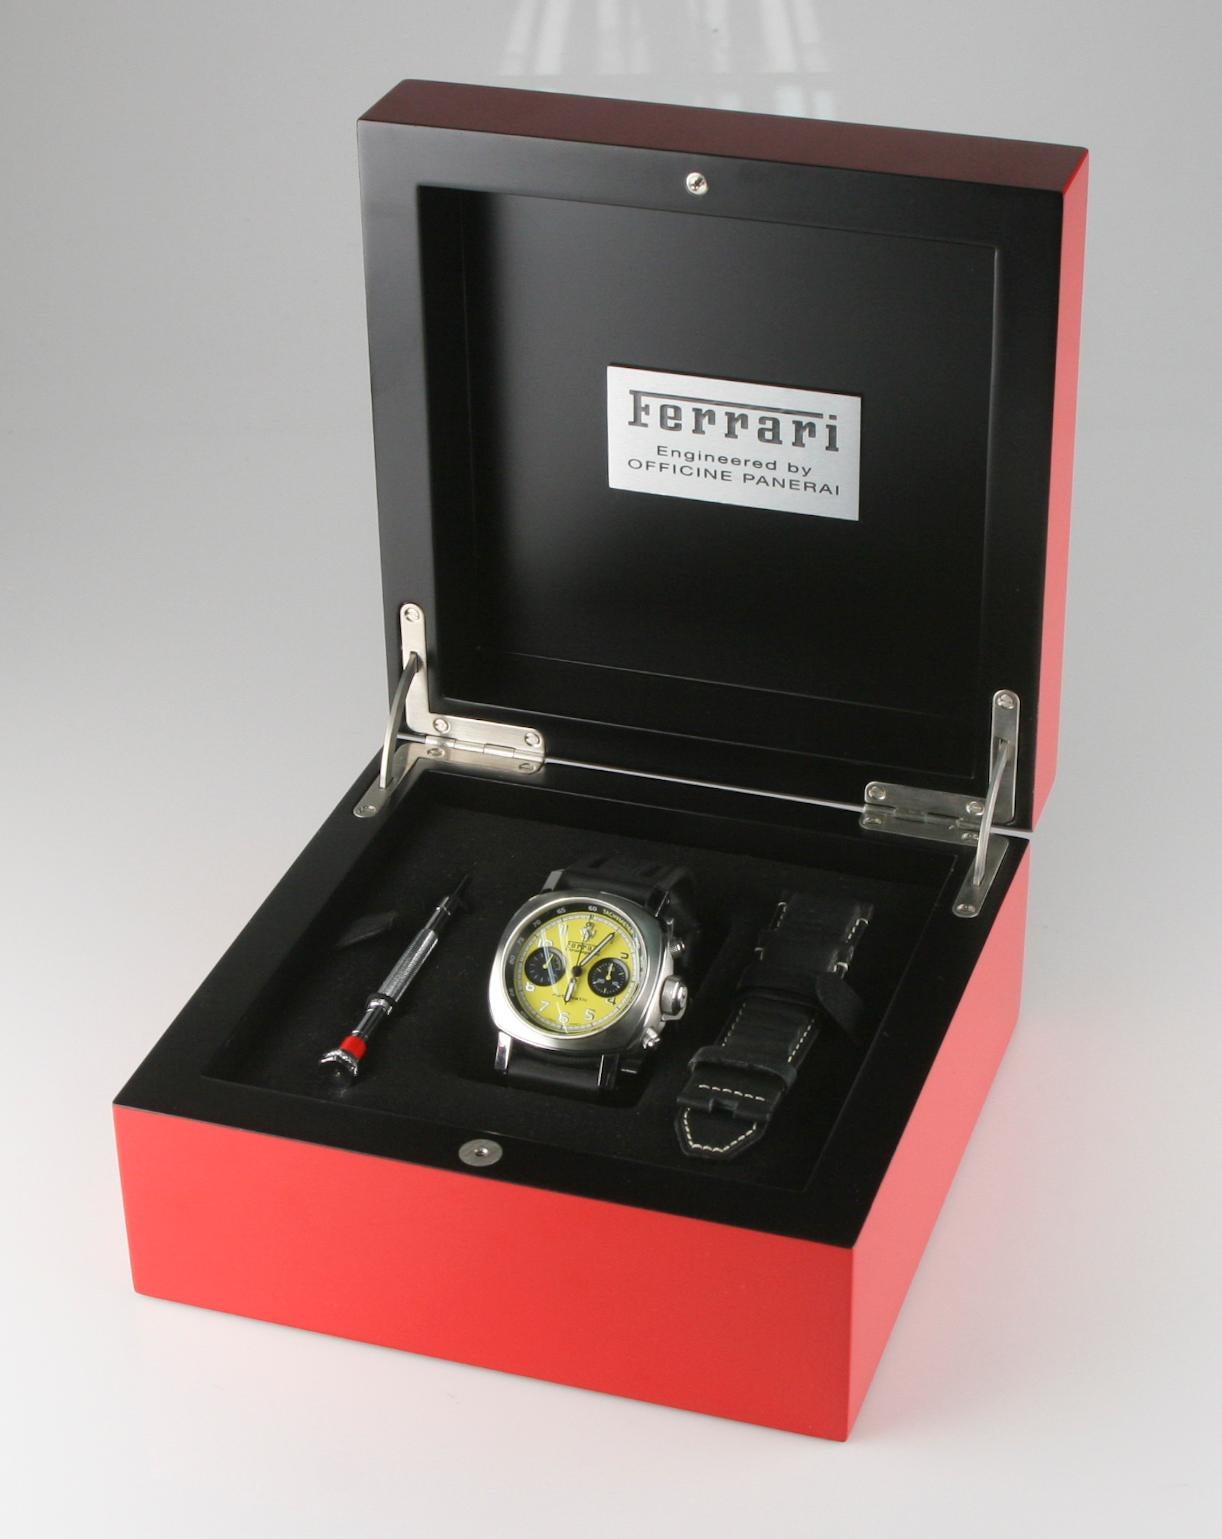 Panerai Ferrari Granturismo Chronograph Men's Automatic Watch Model FER00011 5